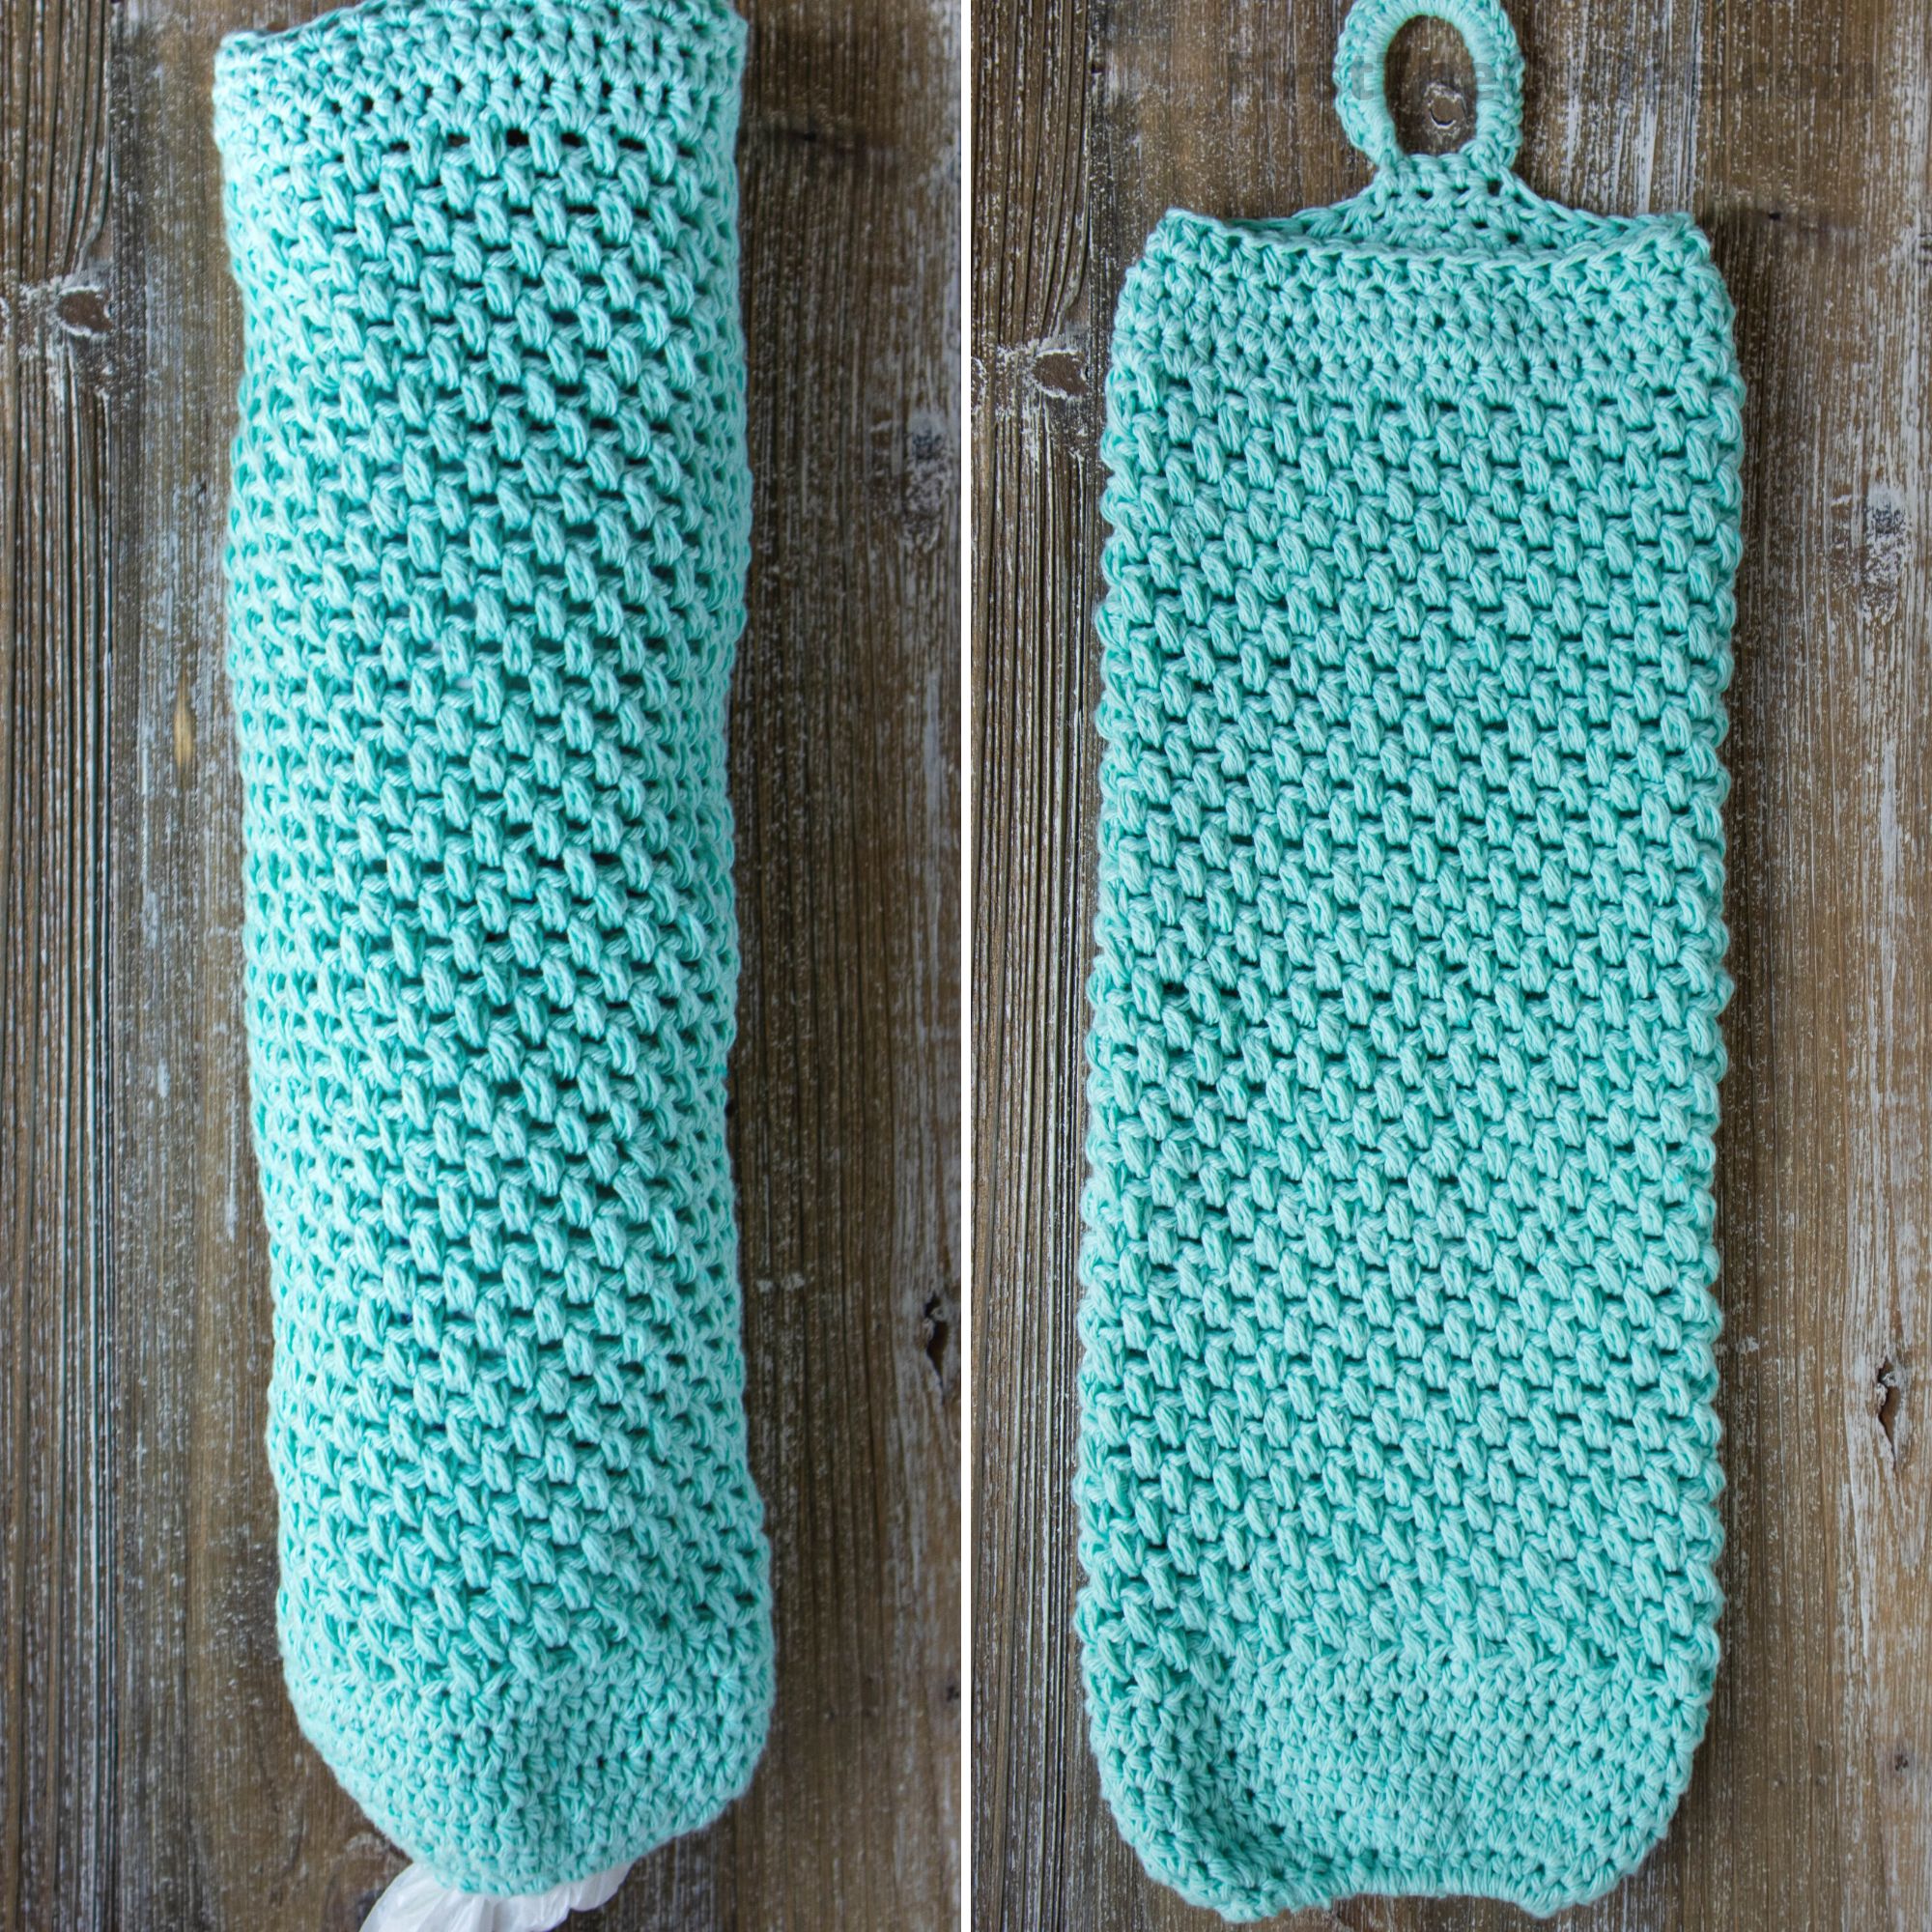 Mini Bean Crochet Grocery Bag Holder - First The Coffee Crochet